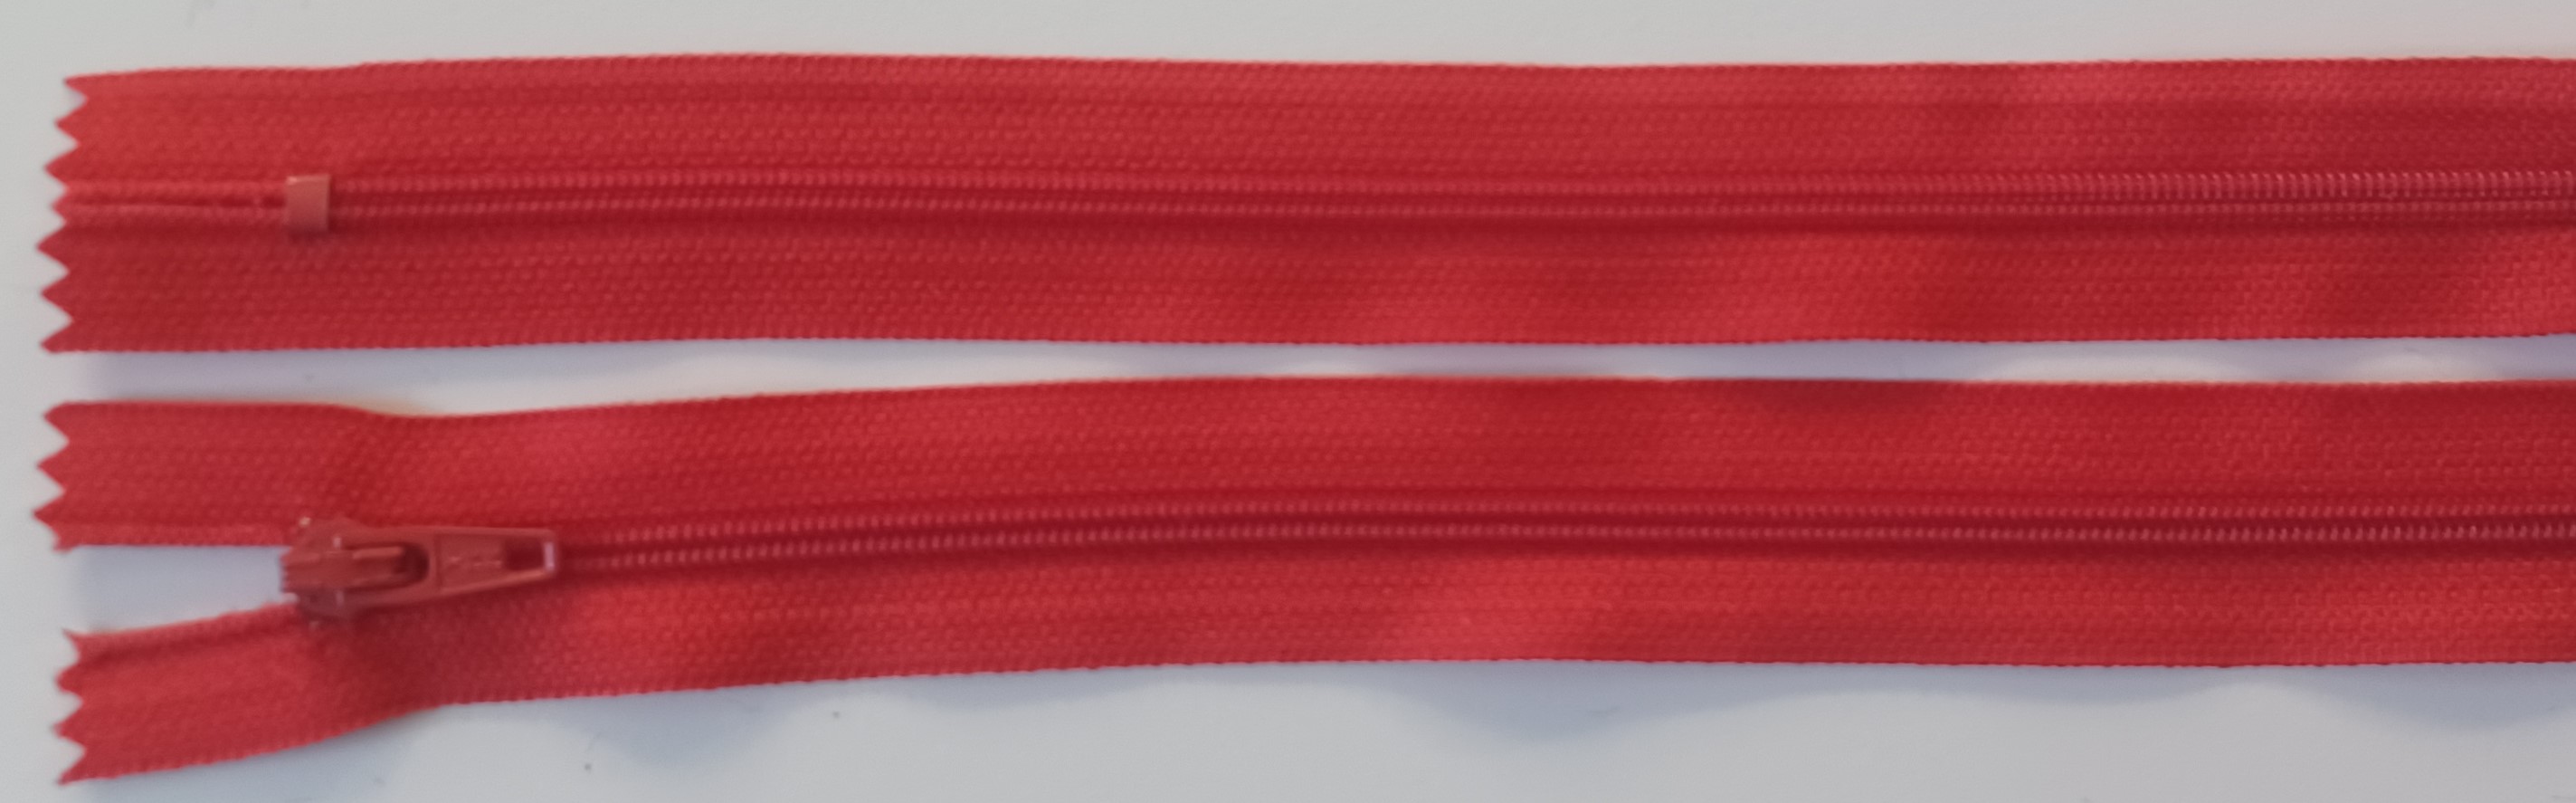 YKK 8" Scarlet Nylon Coil Zipper